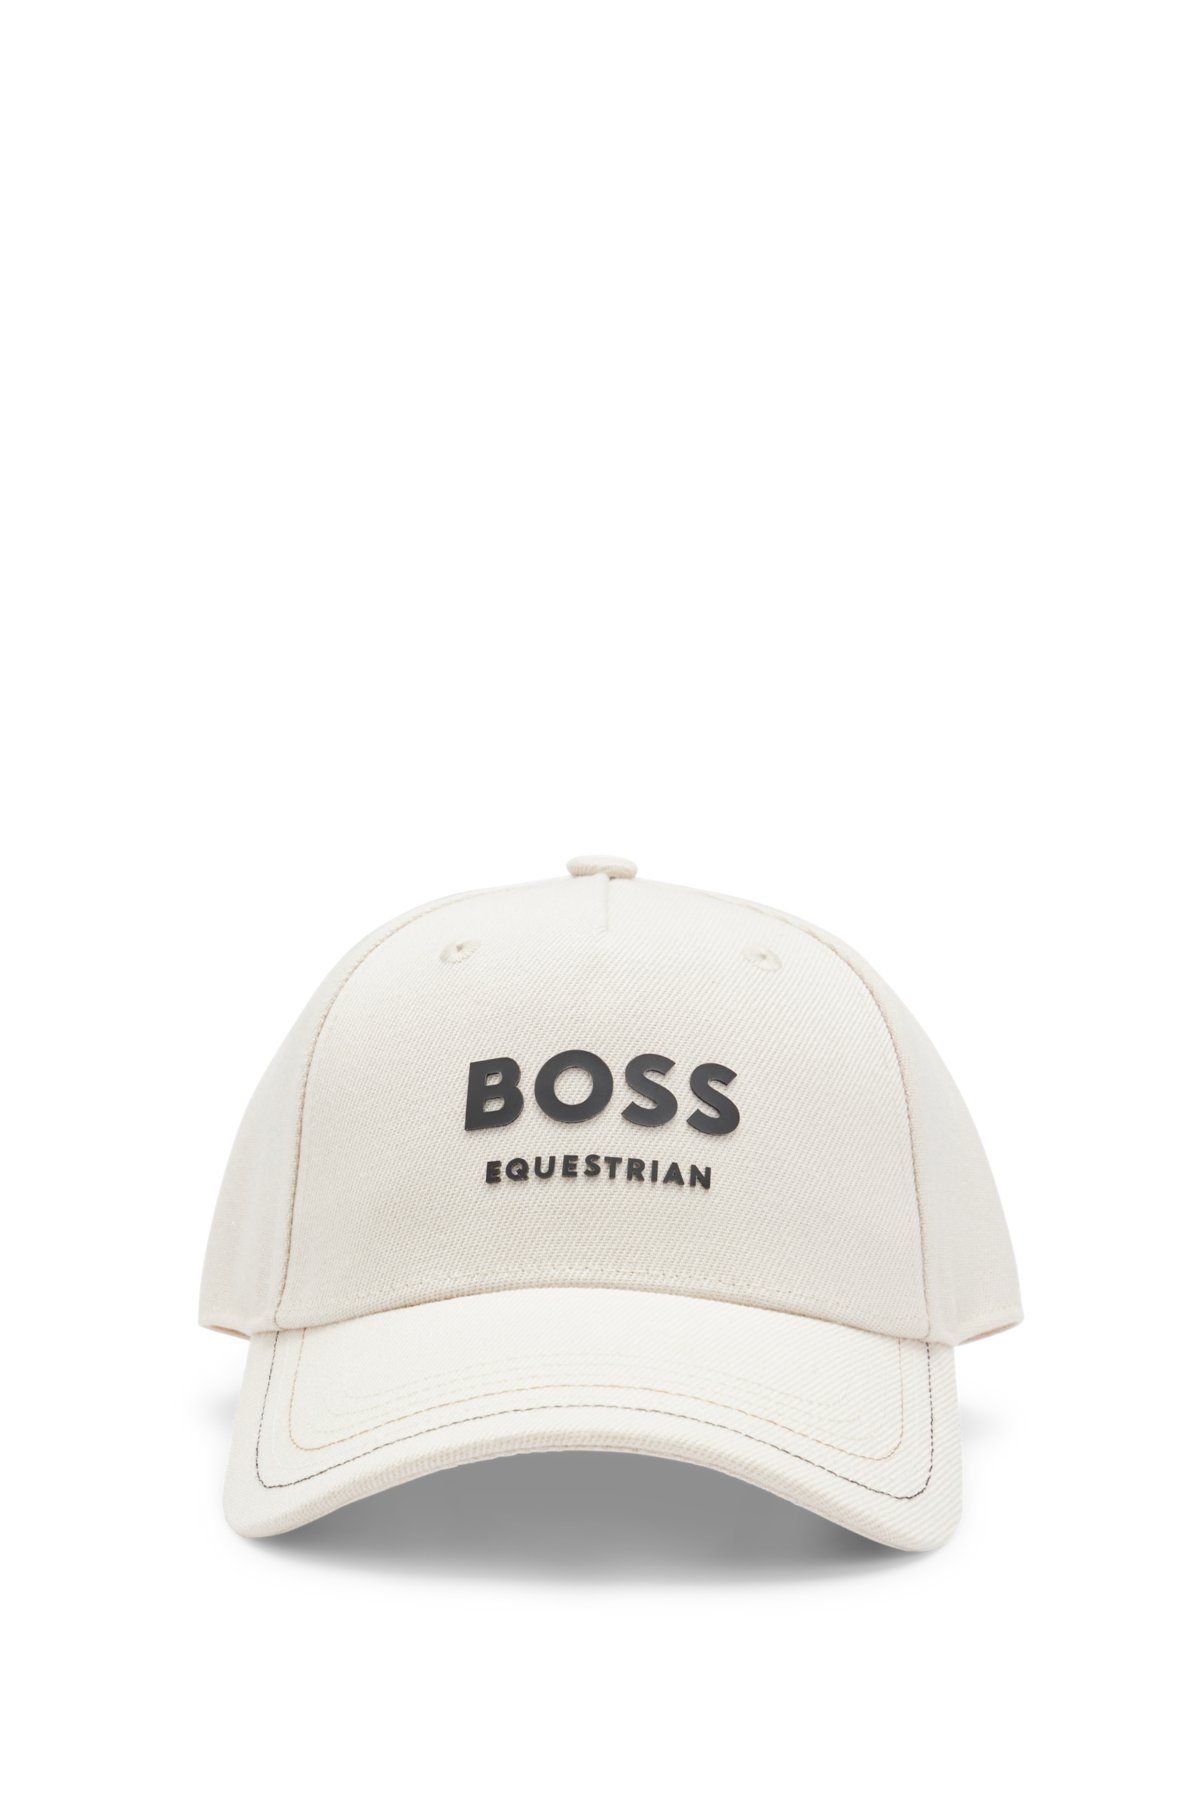 BOSS - Equestrian five-panel cap with logo details | Baseball Caps